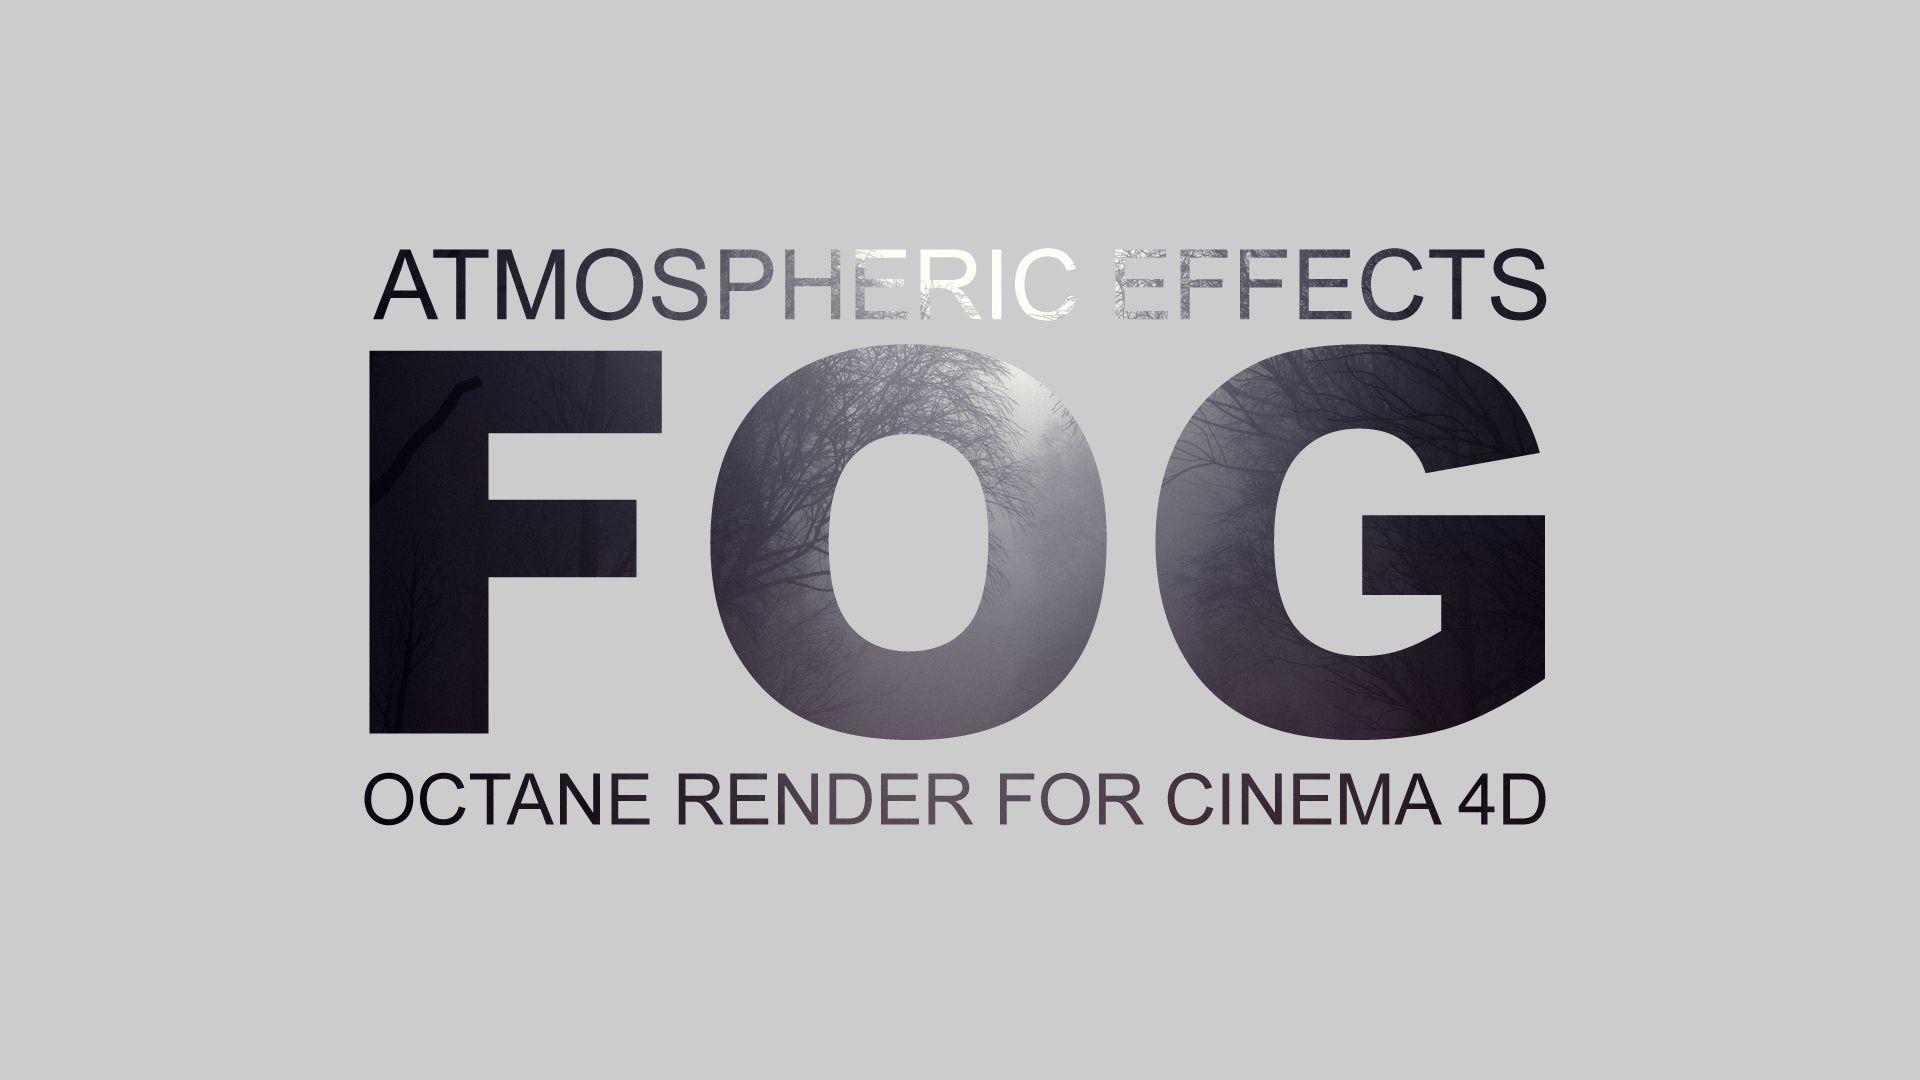 Fog Logo - Fog with OctaneRender for Cinema 4D